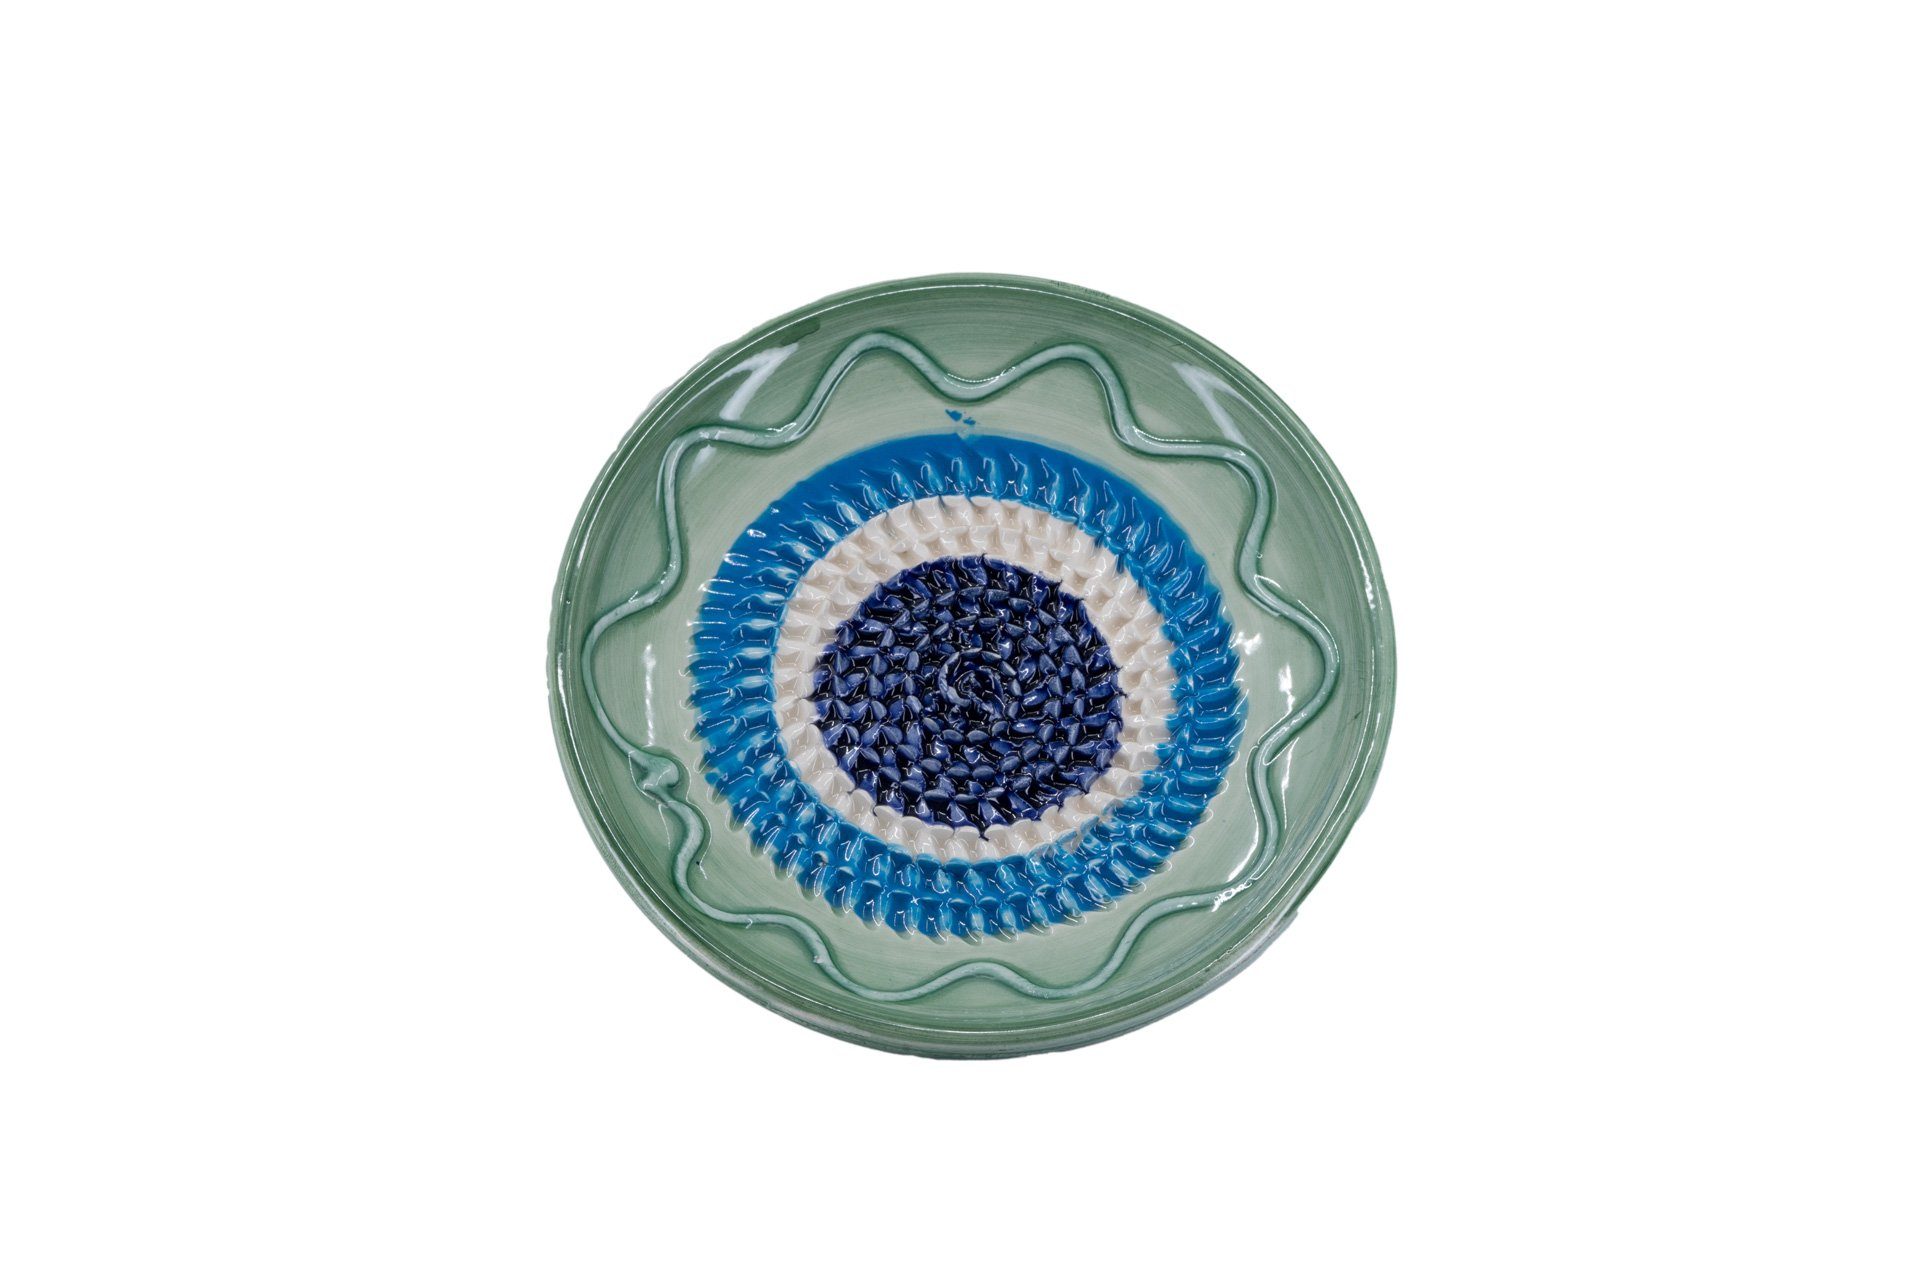 Kaladia Multireibe Reibeteller in Grün & Blau, Keramik, handbemalte Küchenreibe - Made in Spain